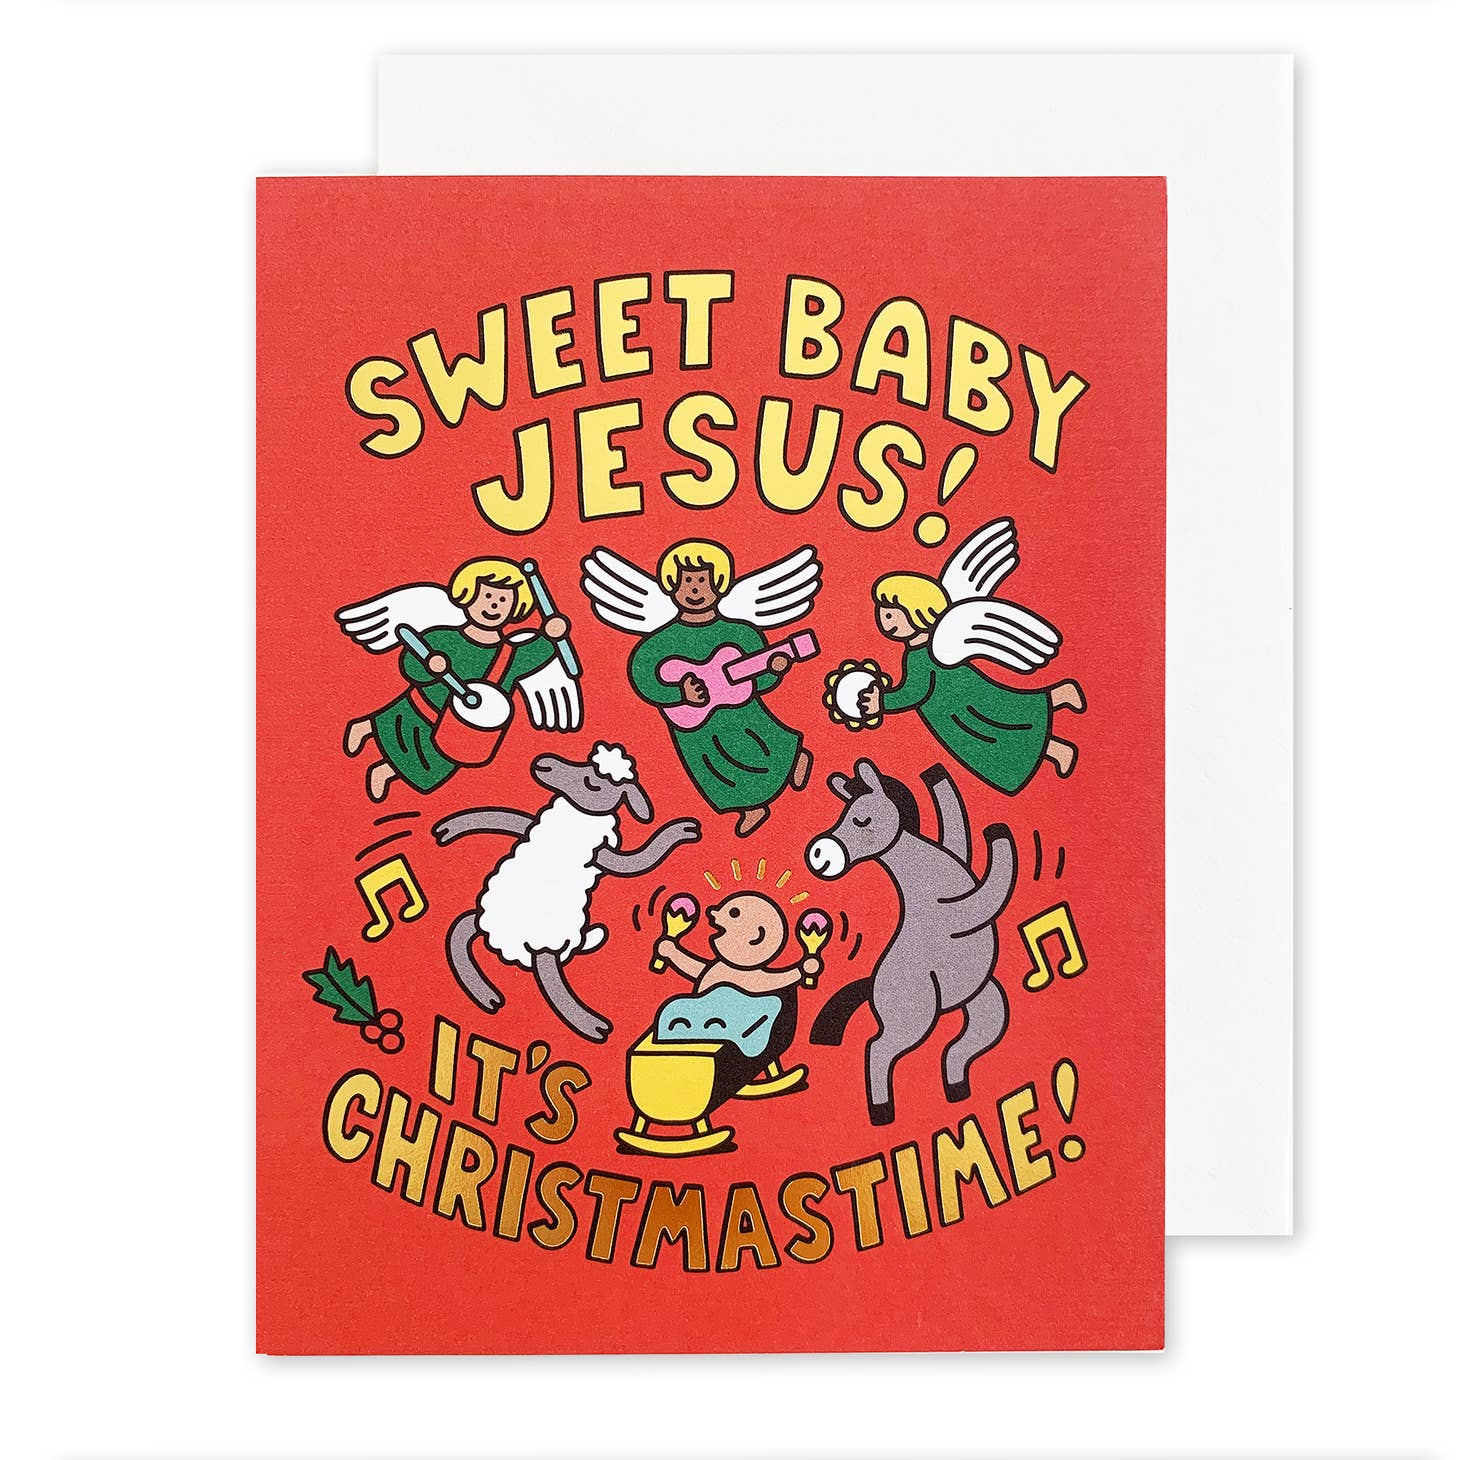 Sweet Baby Jesus! Holiday